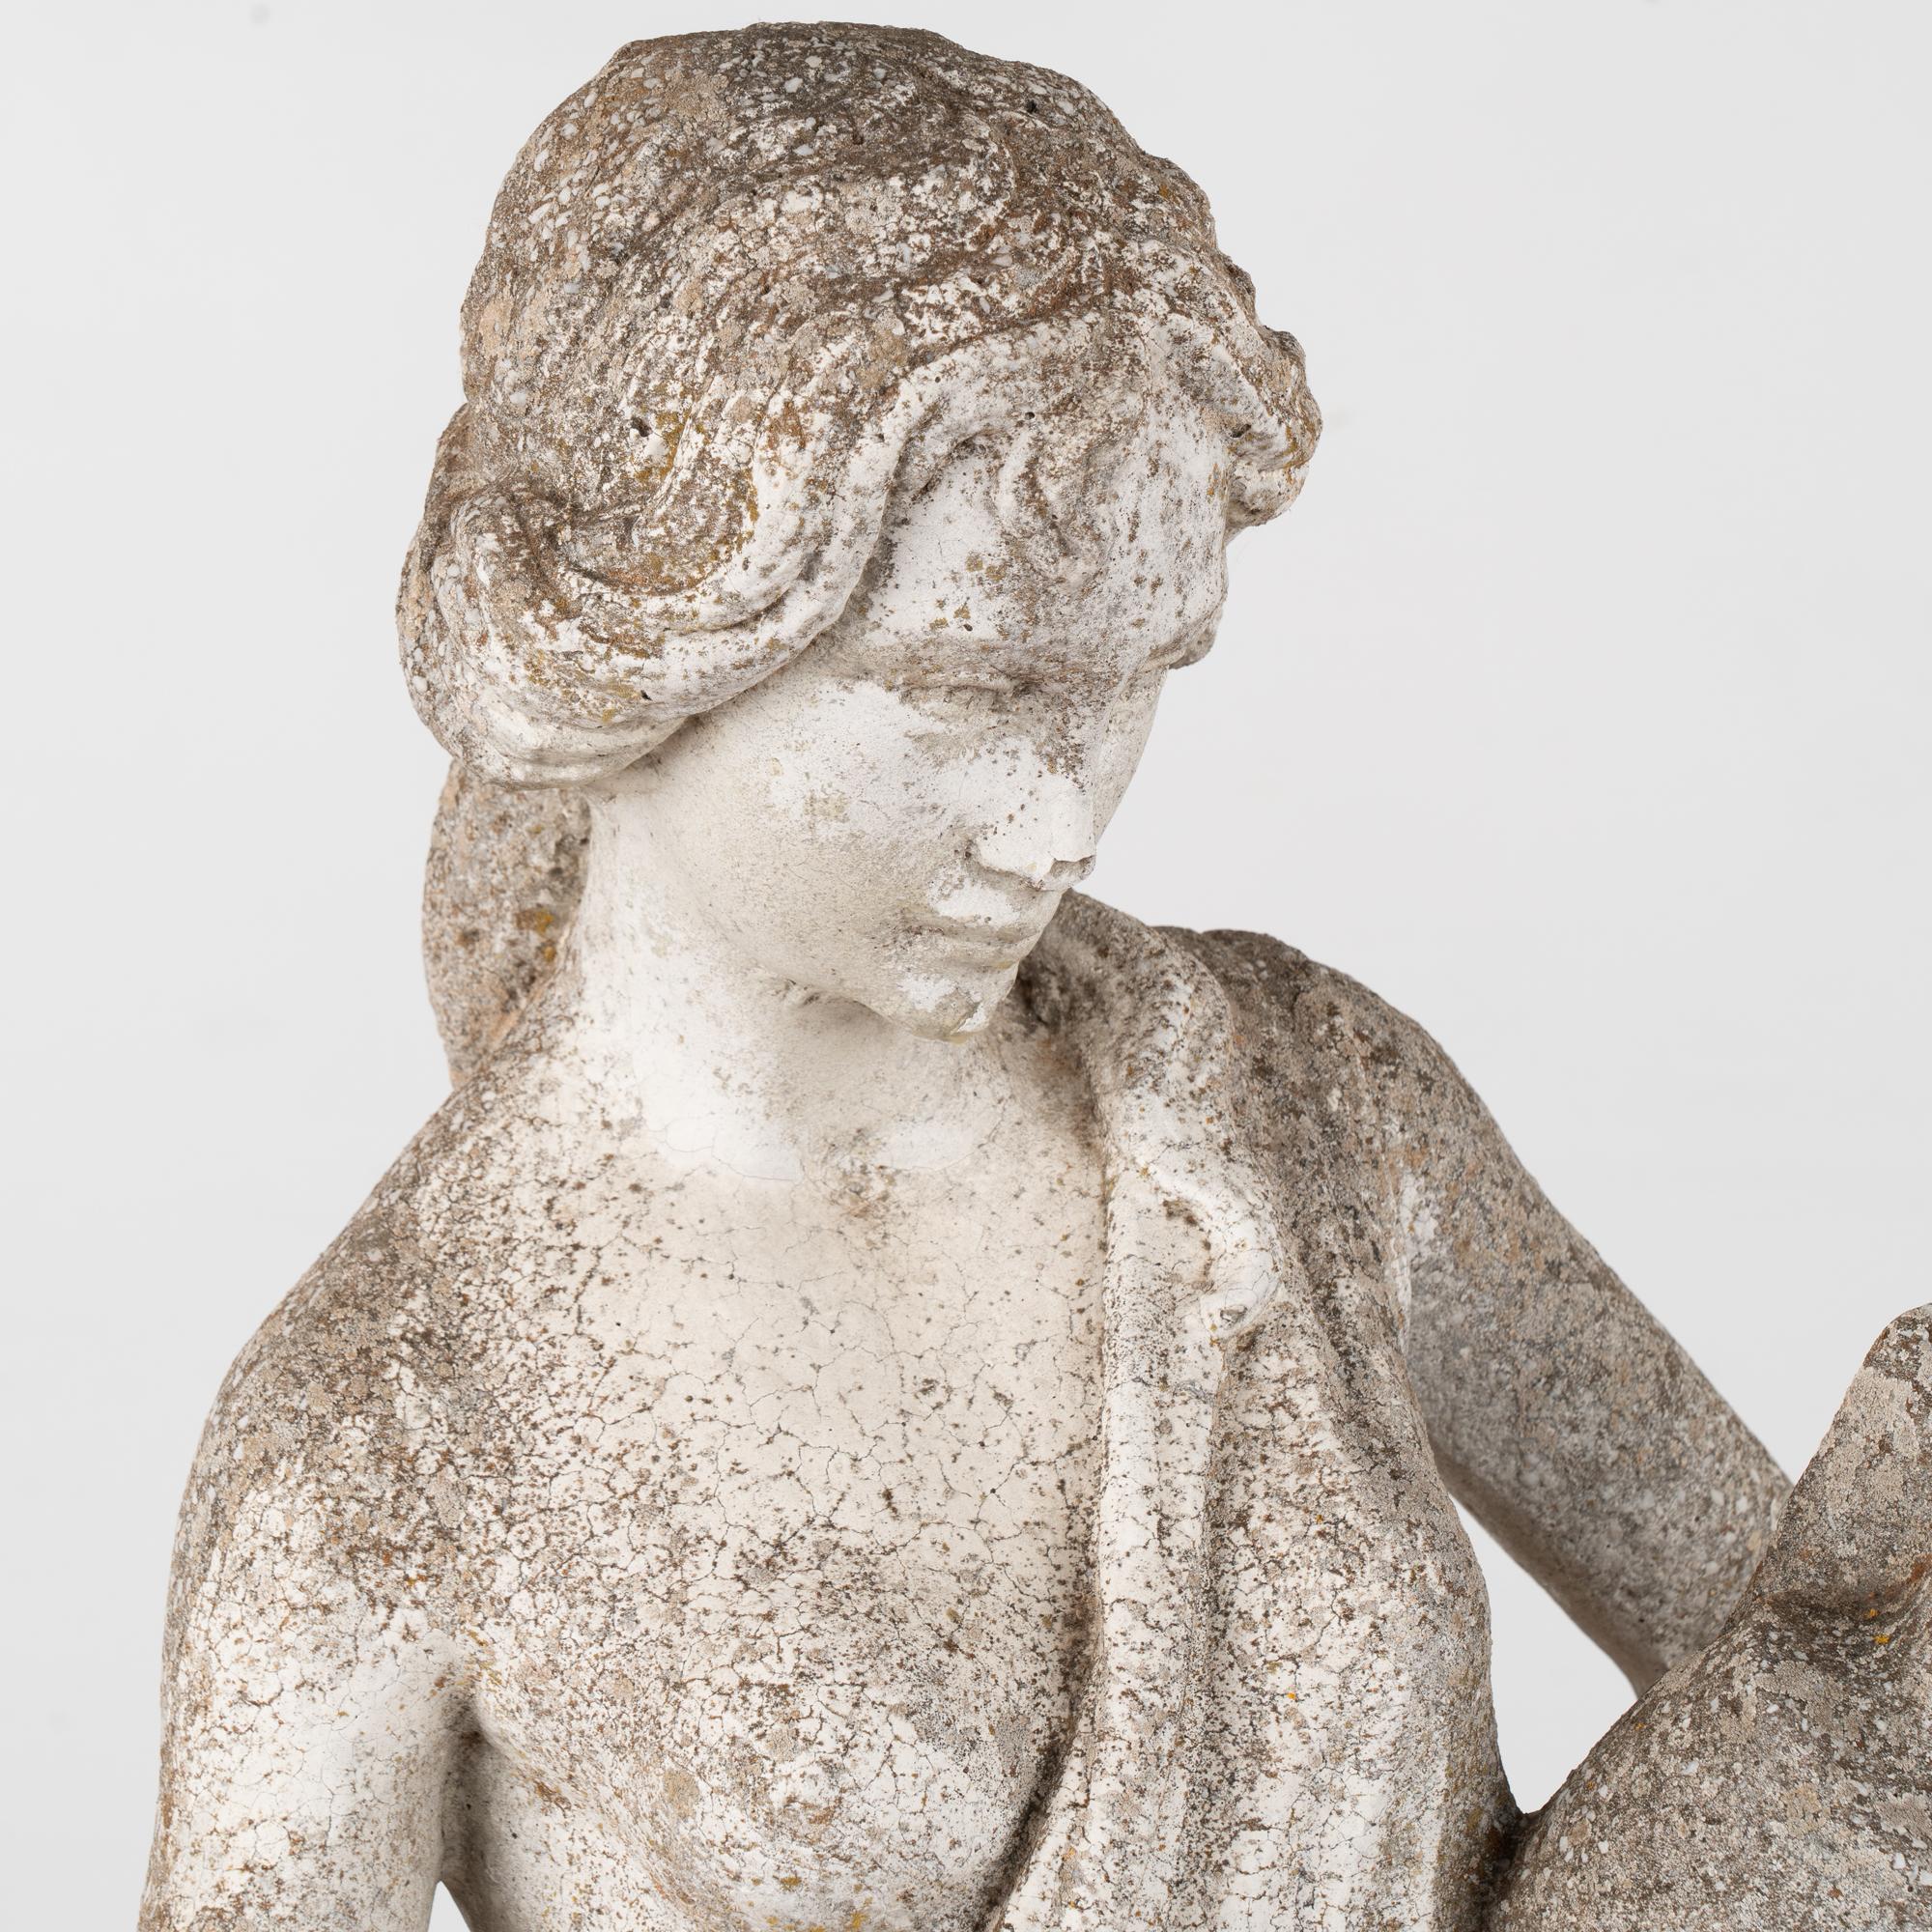 Classical Roman Garden Statuary of Standing Female With Wine Jugs, Denmark circa 1920-40